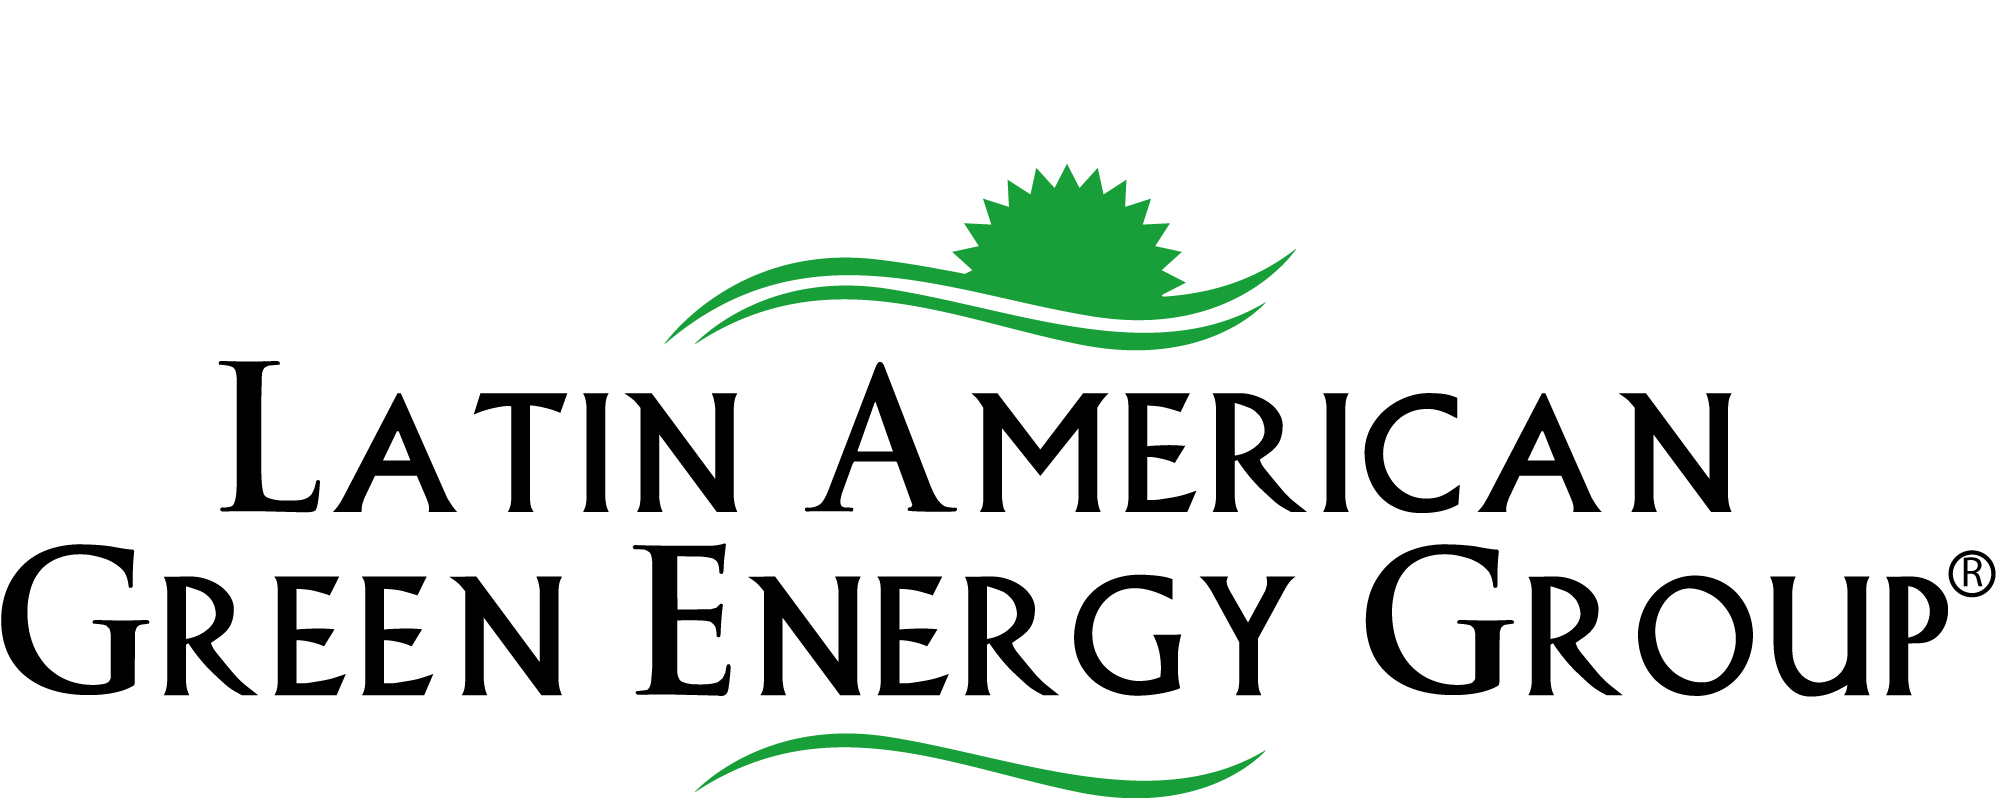 LATIN AMERICAN GREEN ENERGY GROUP